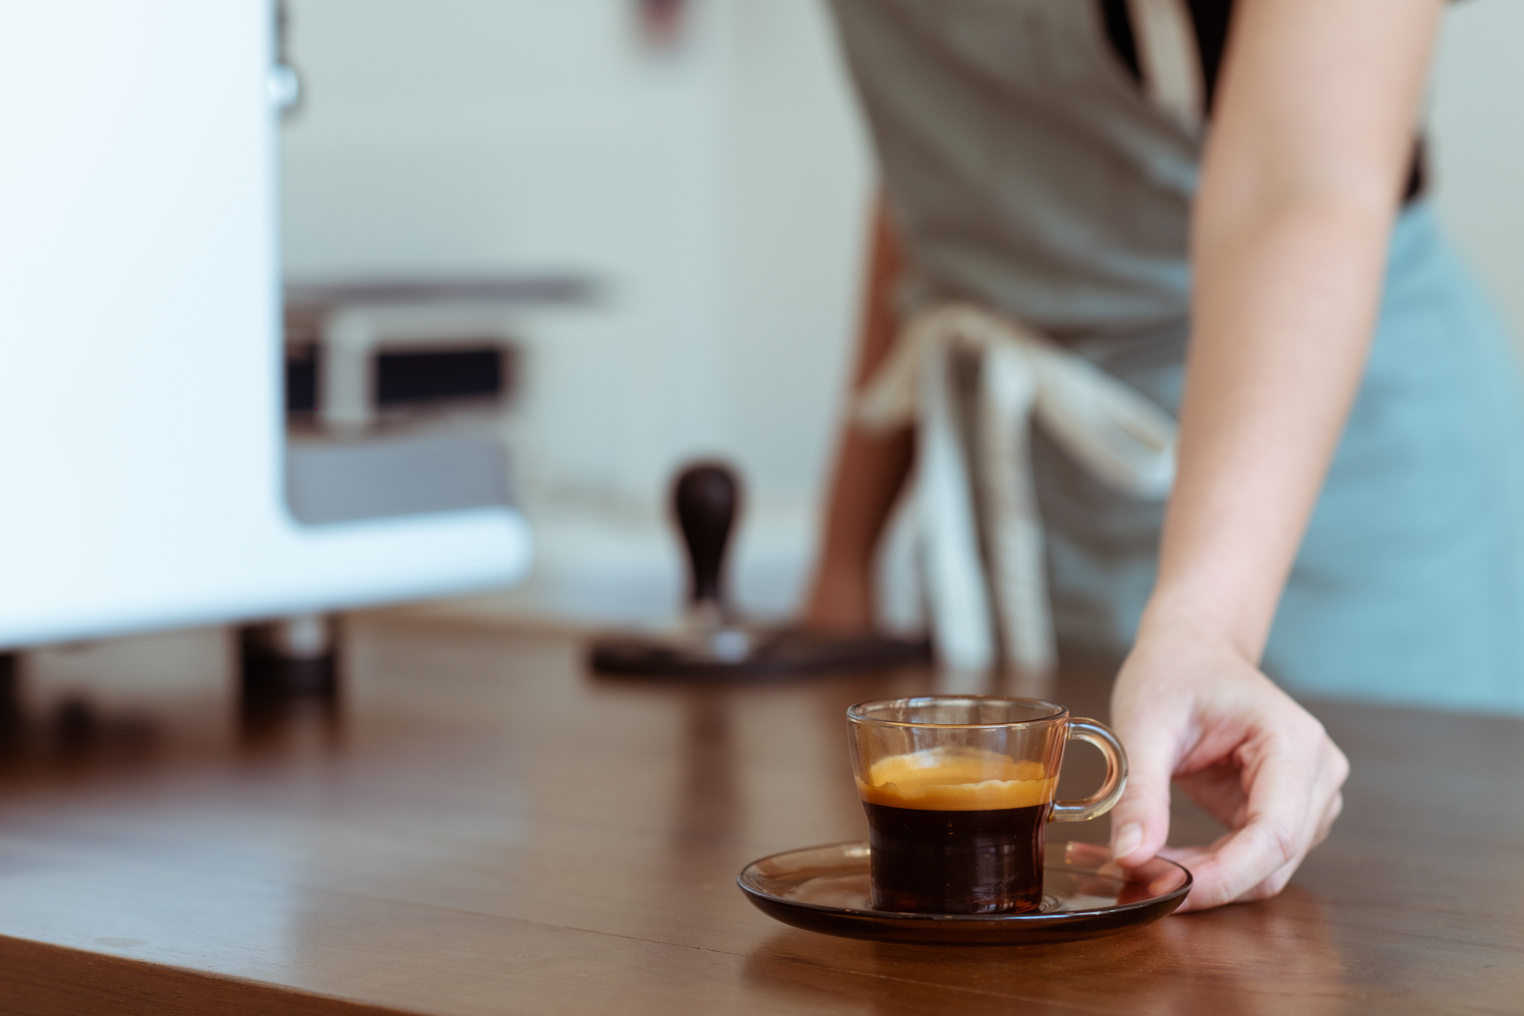 Crop coffee house worker serving cup of freshly brewed espresso